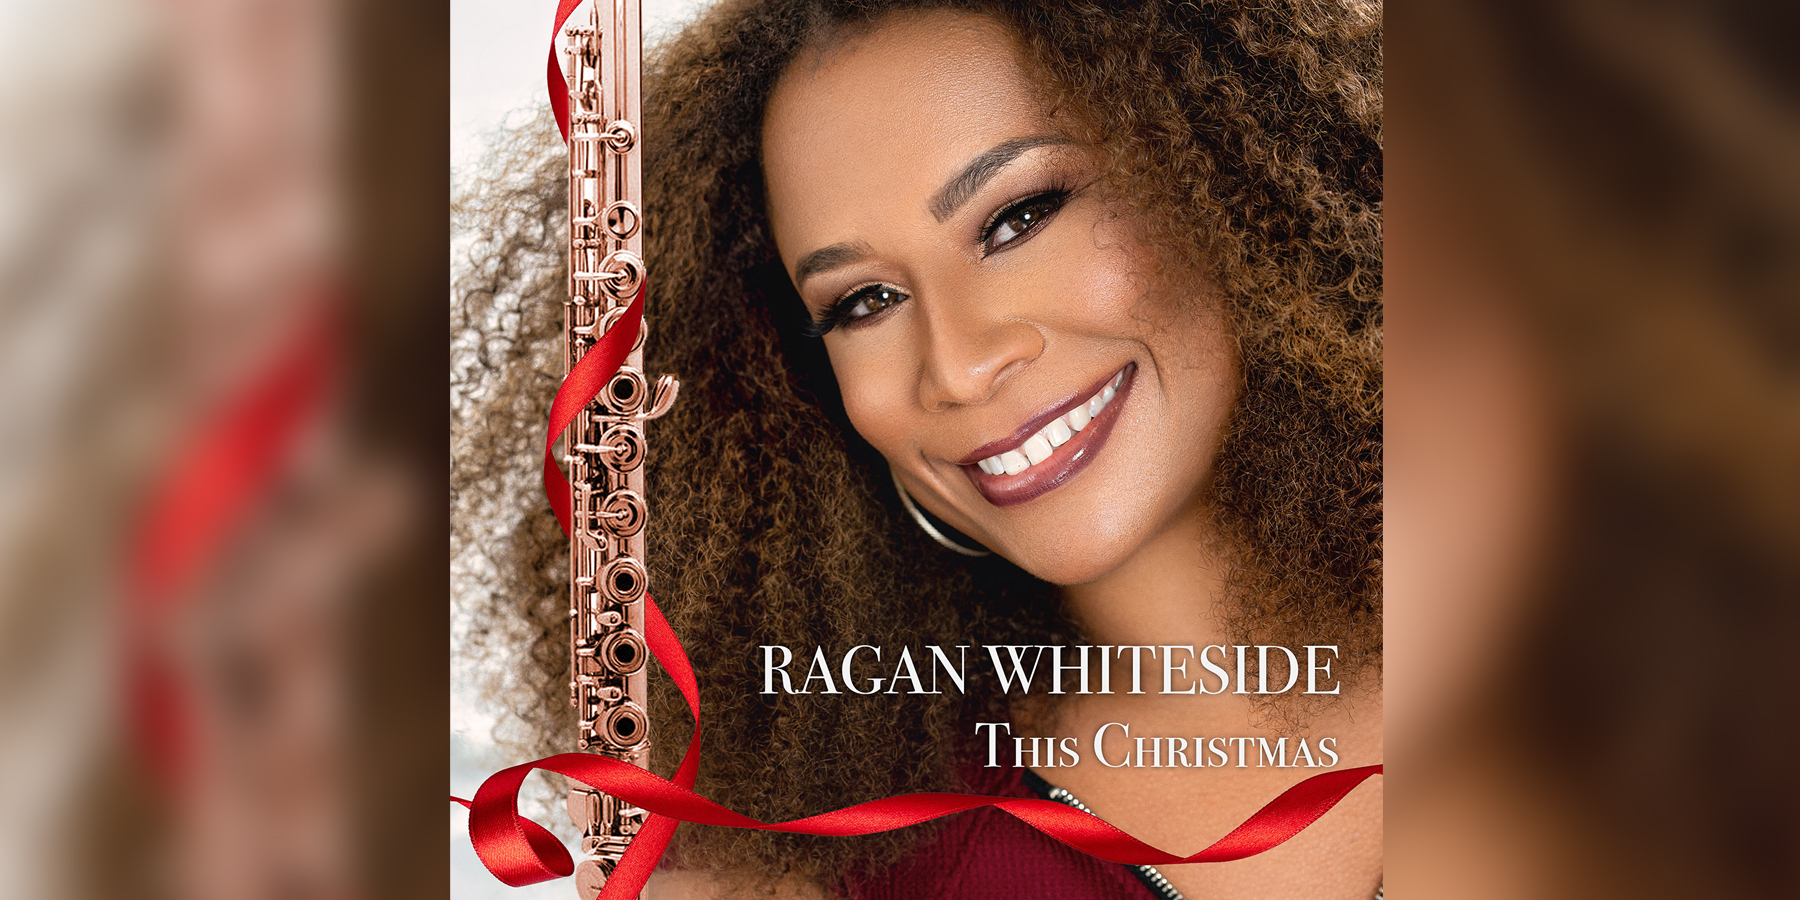 Contemporary Jazz Flute Phenomenon Ragan Whiteside Gets in Holiday Spirit with ‘This Christmas’ Single